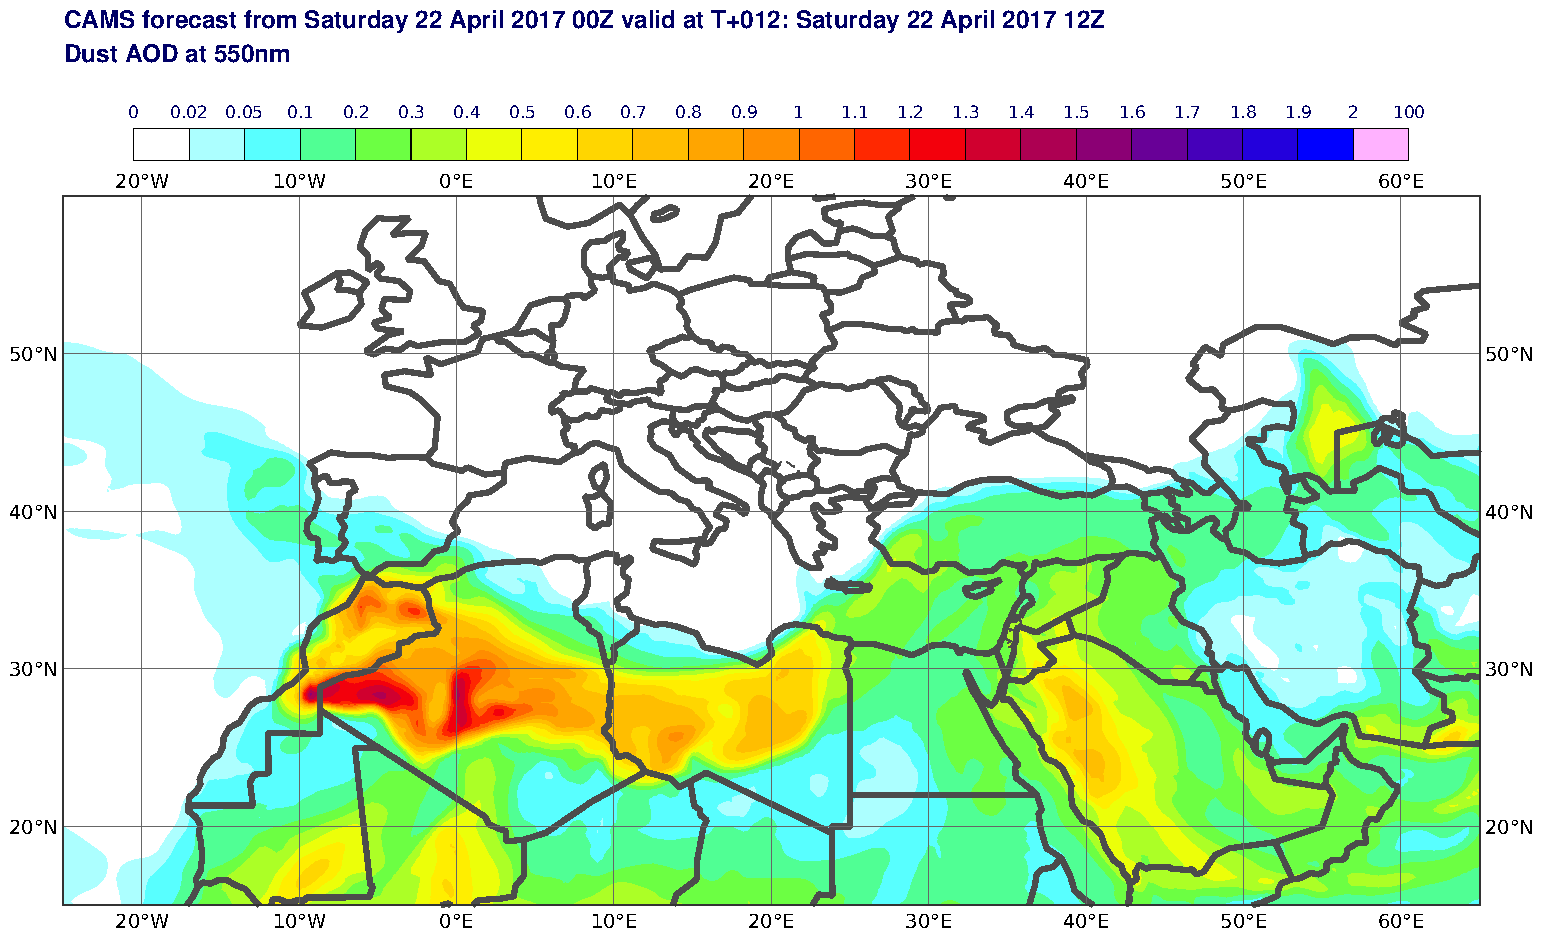 Dust AOD at 550nm valid at T12 - 2017-04-22 12:00